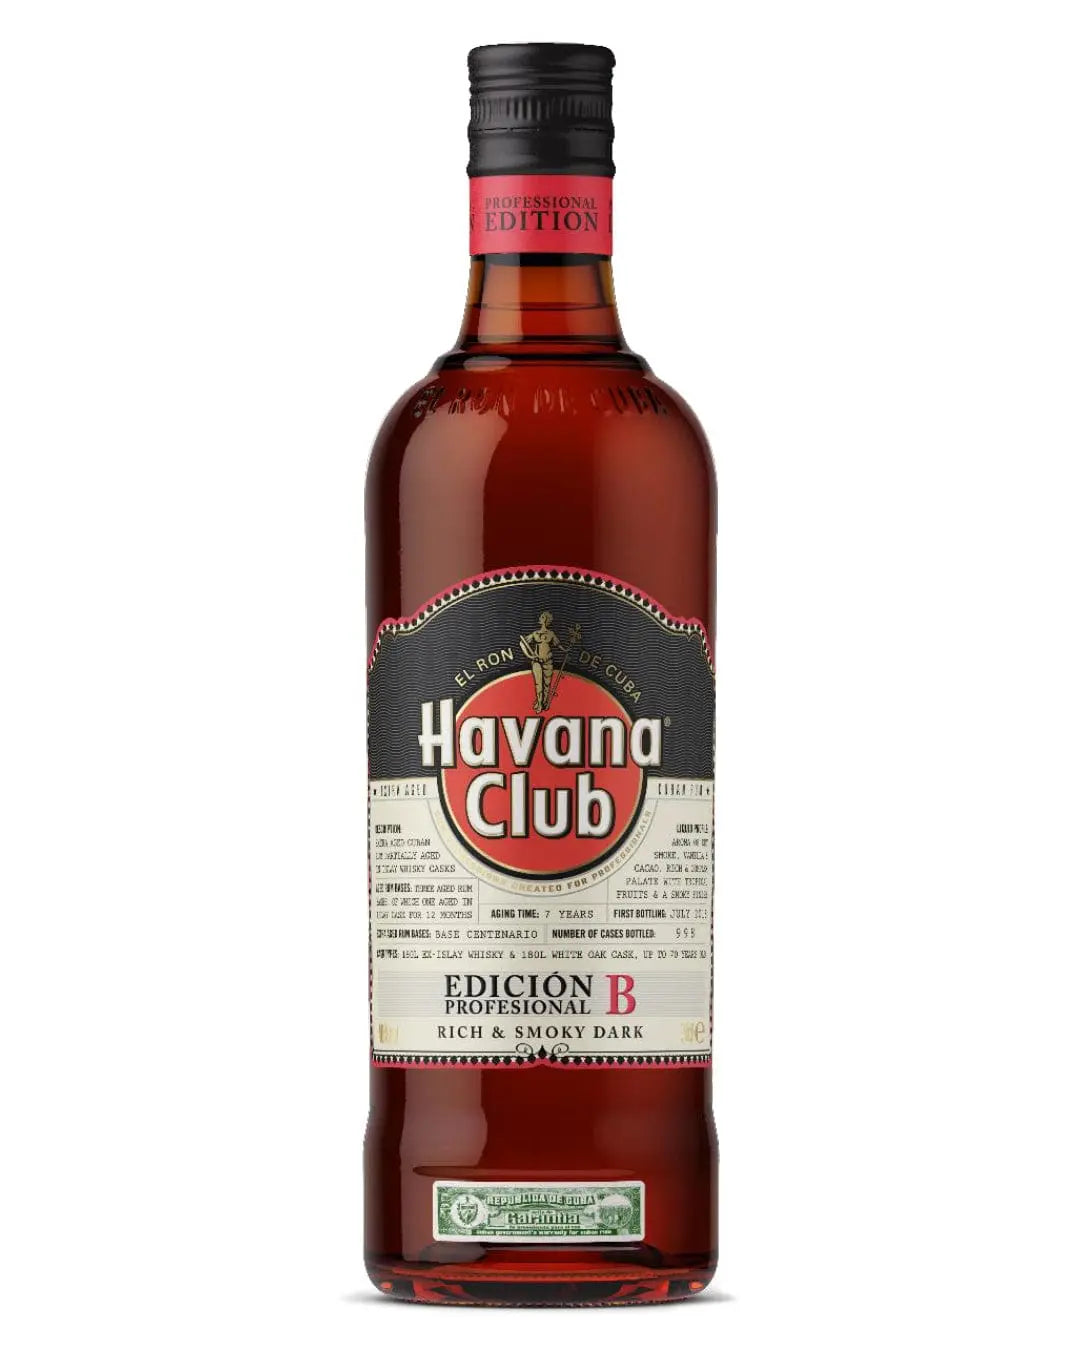 Havana Club Professional Edition B Rum, 70 cl Rum